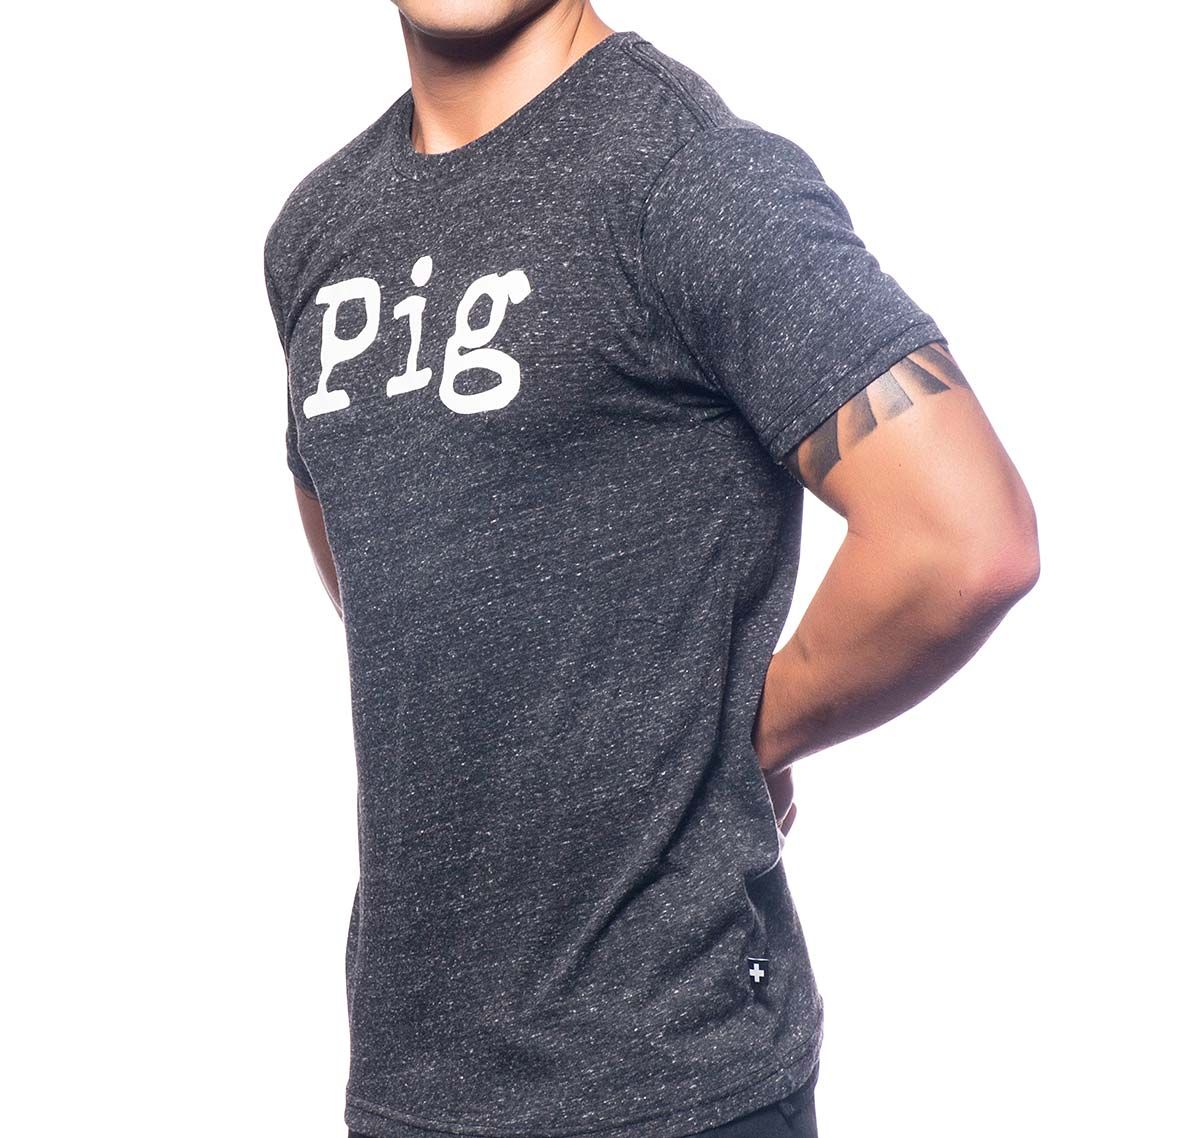 Andrew Christian T-Shirt PIG TEE 10213, grau schwarz